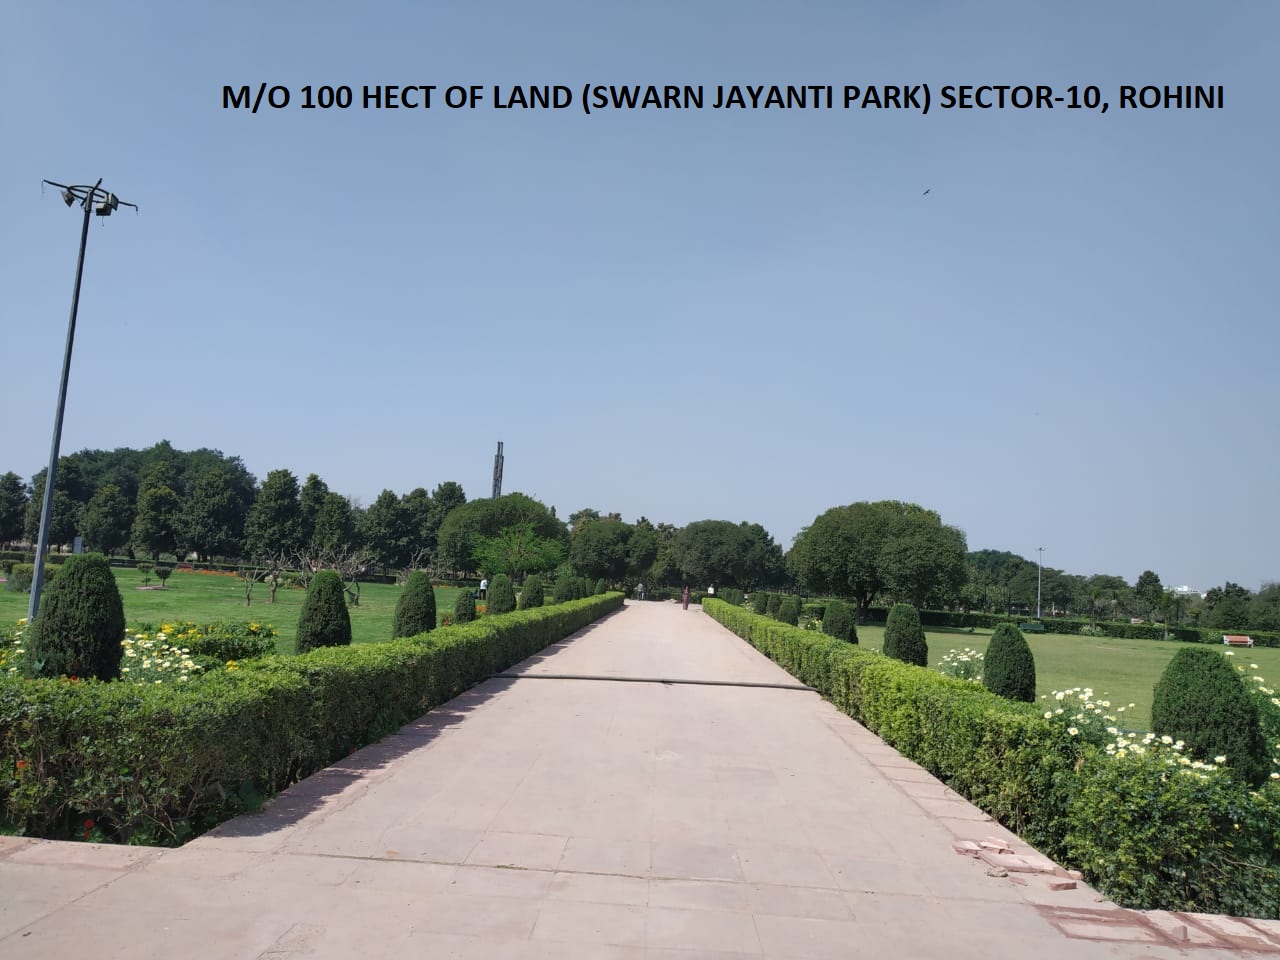 Swarn Jayanti Park